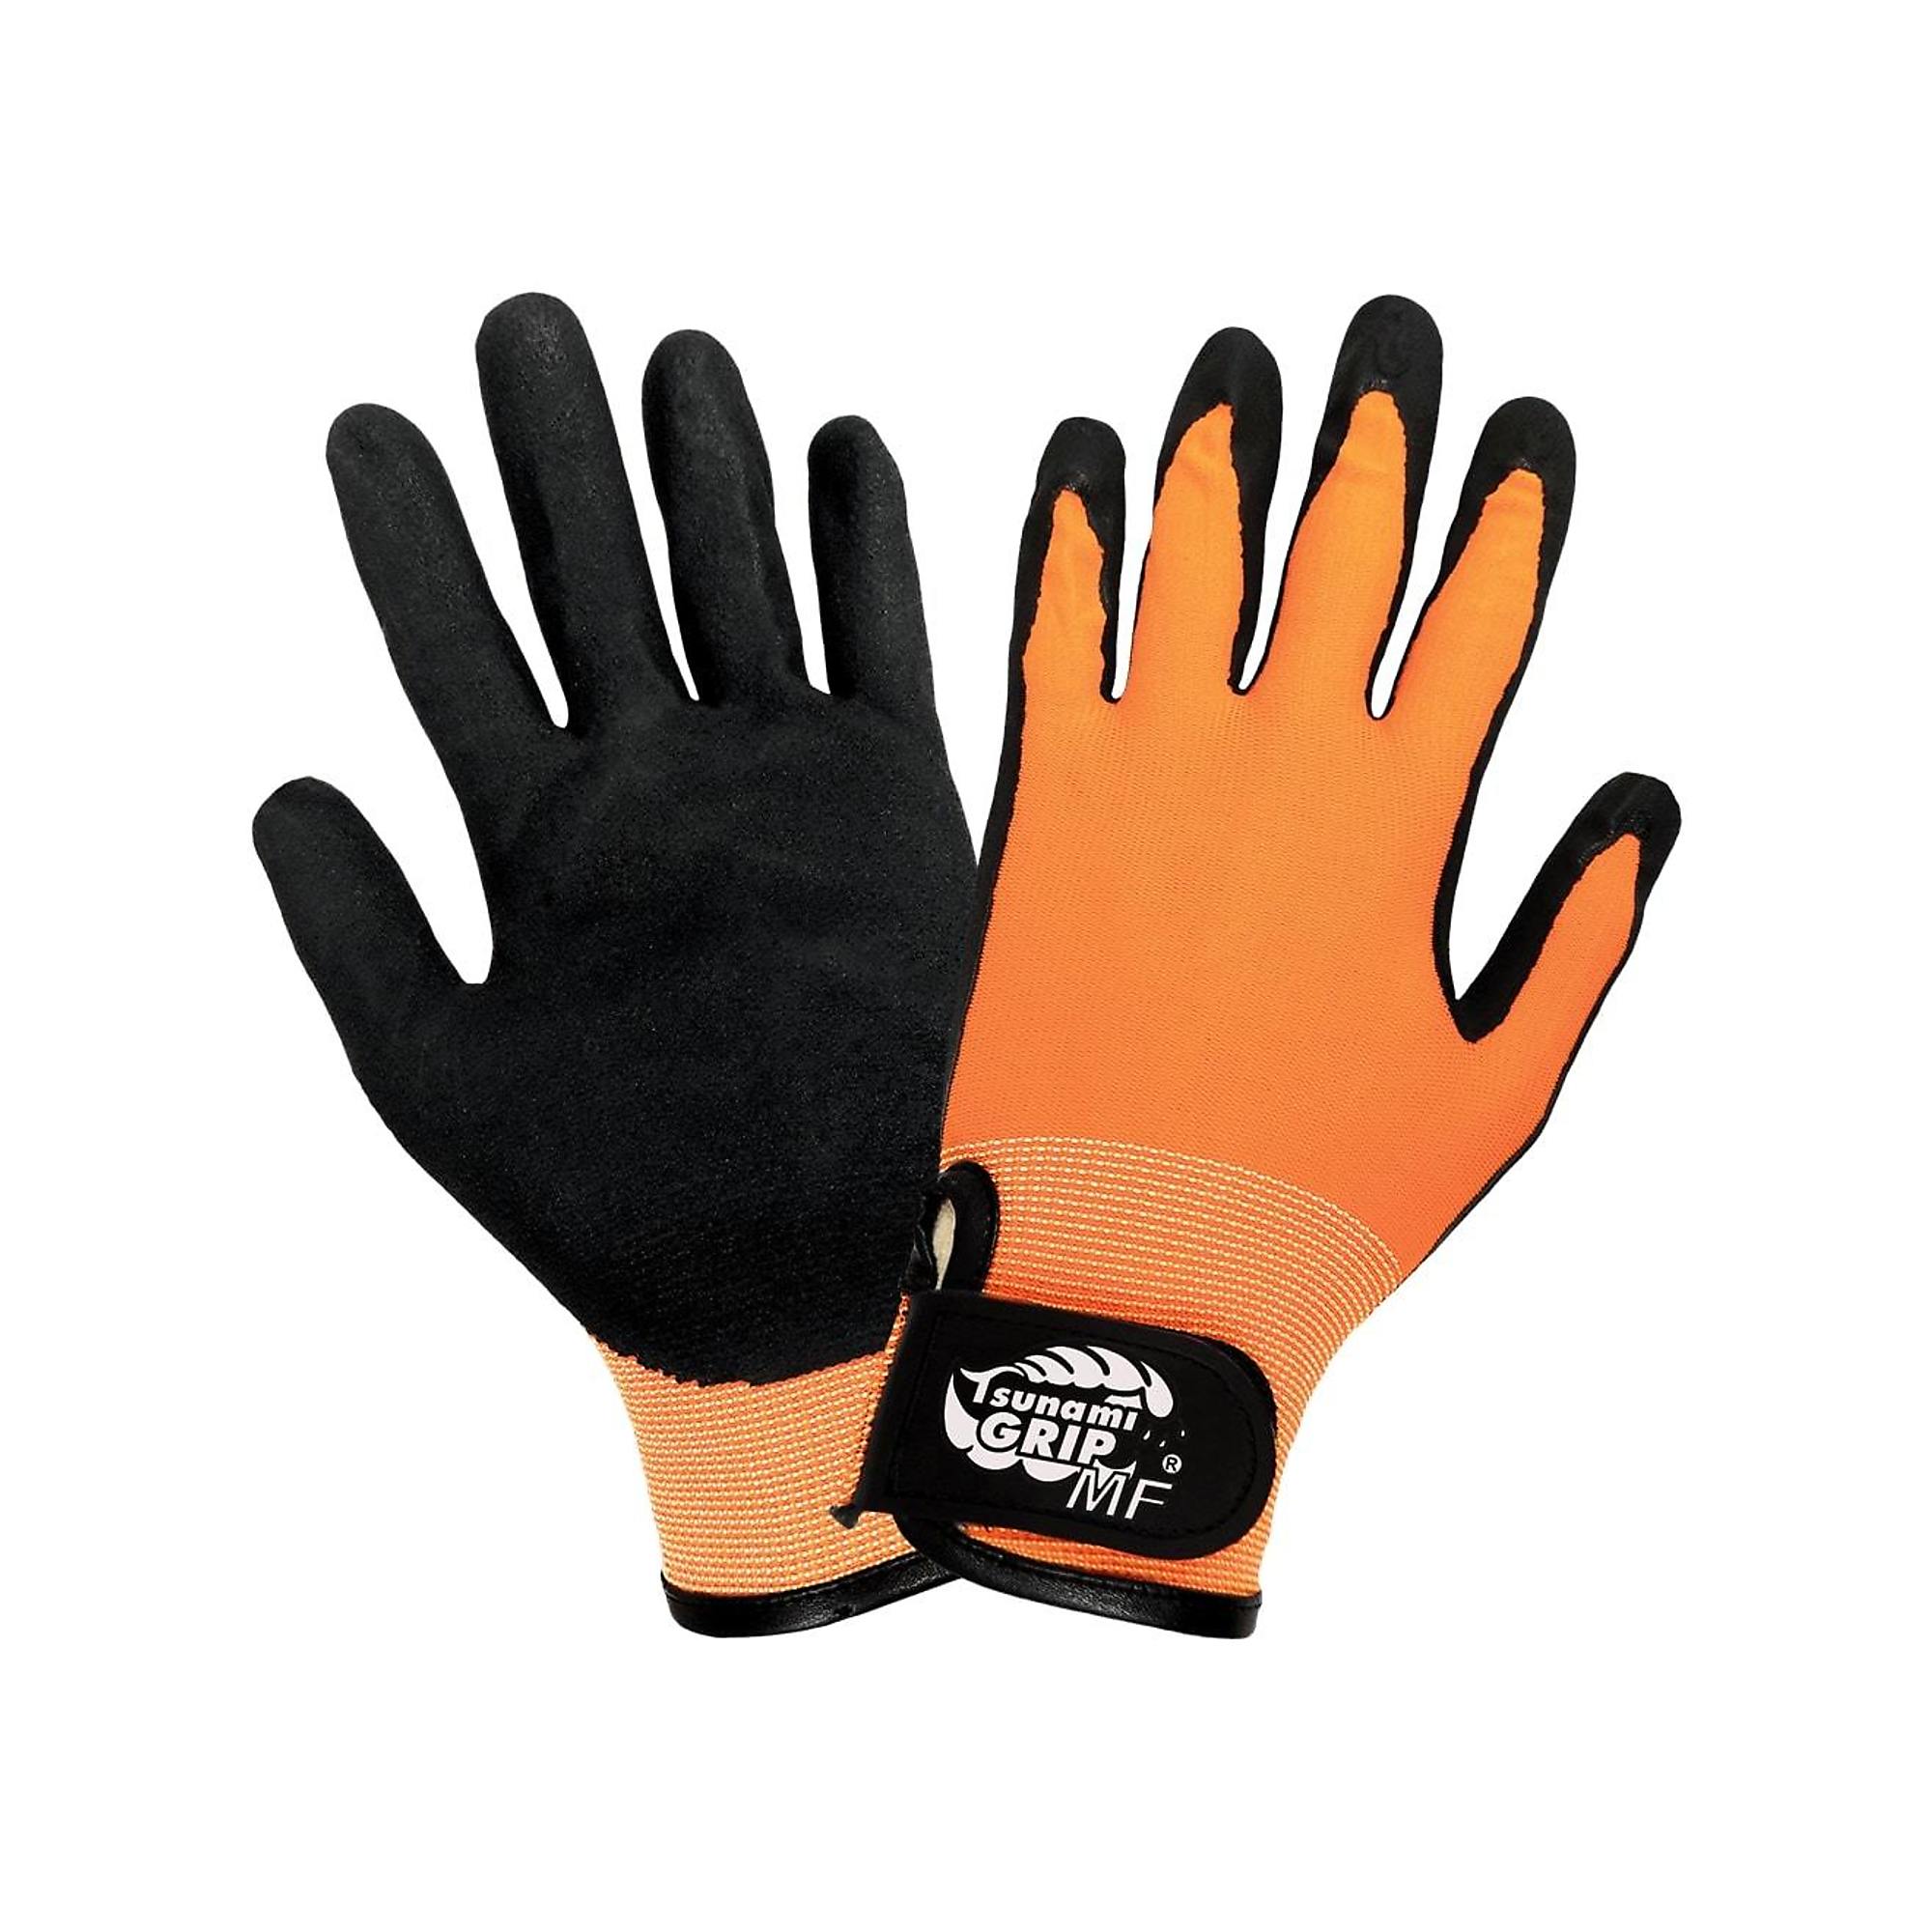 Global Glove Tsunami Grip , MF HV Mach Finish Nitrile Palm Coated Gloves, Size M, Color High-Visibility Orange/Black, Included (qty.) 12 Model 510MFV-